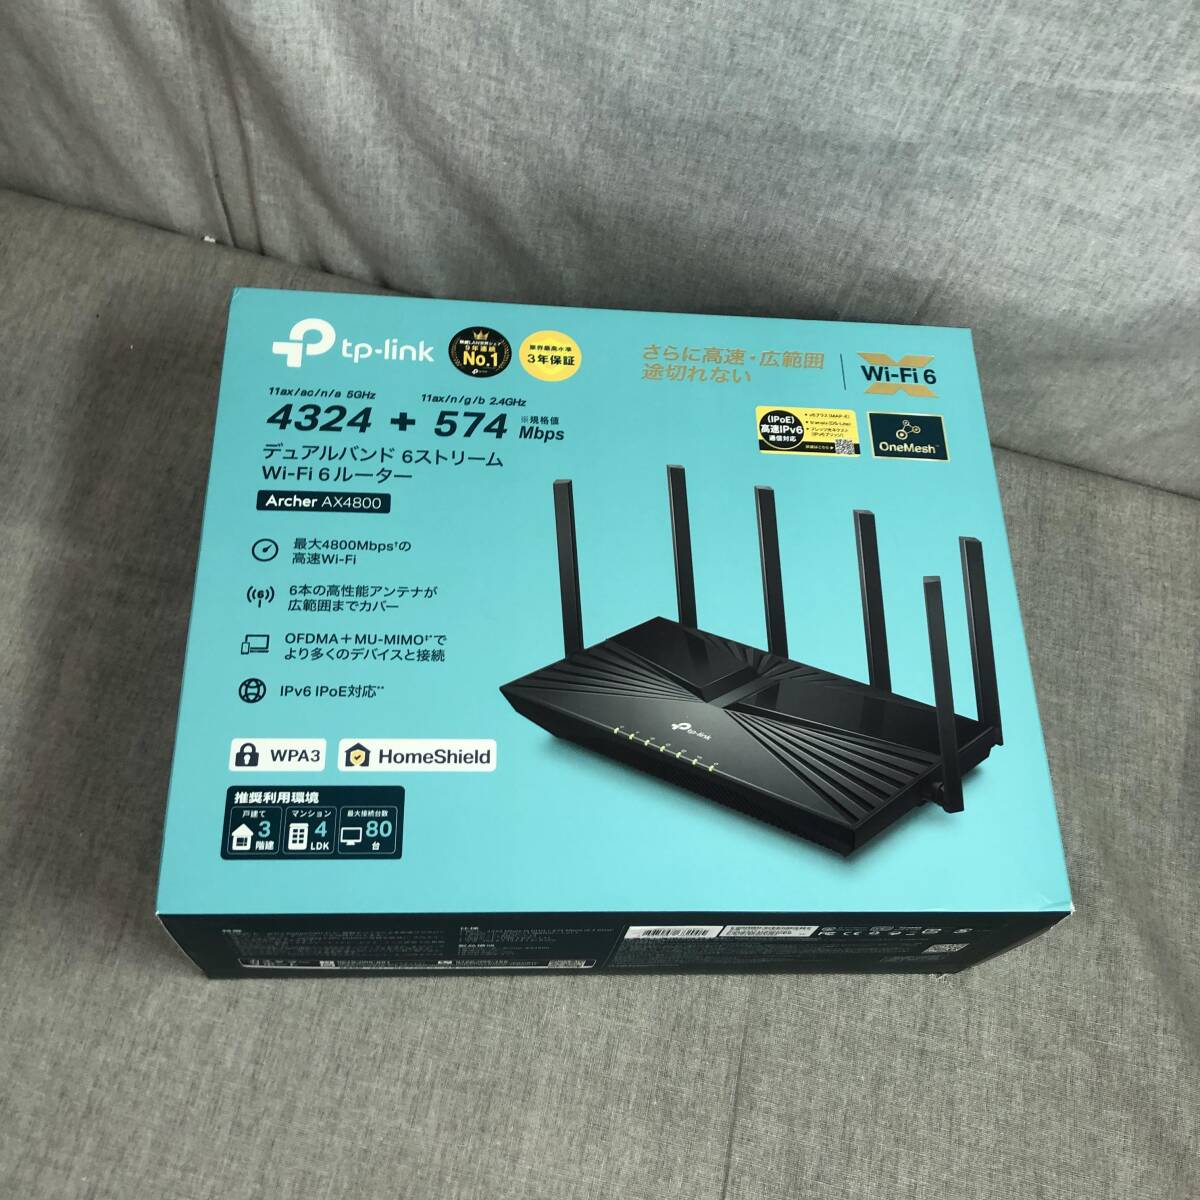 TP-Link WiFi ルーター WiFi6 PS5 対応 無線LAN 11ax AX4800 4324Mbps (5 GHz) + 574 Mbps (2.4 GHz) OneMesh対応 Archer AX4800/A_画像1